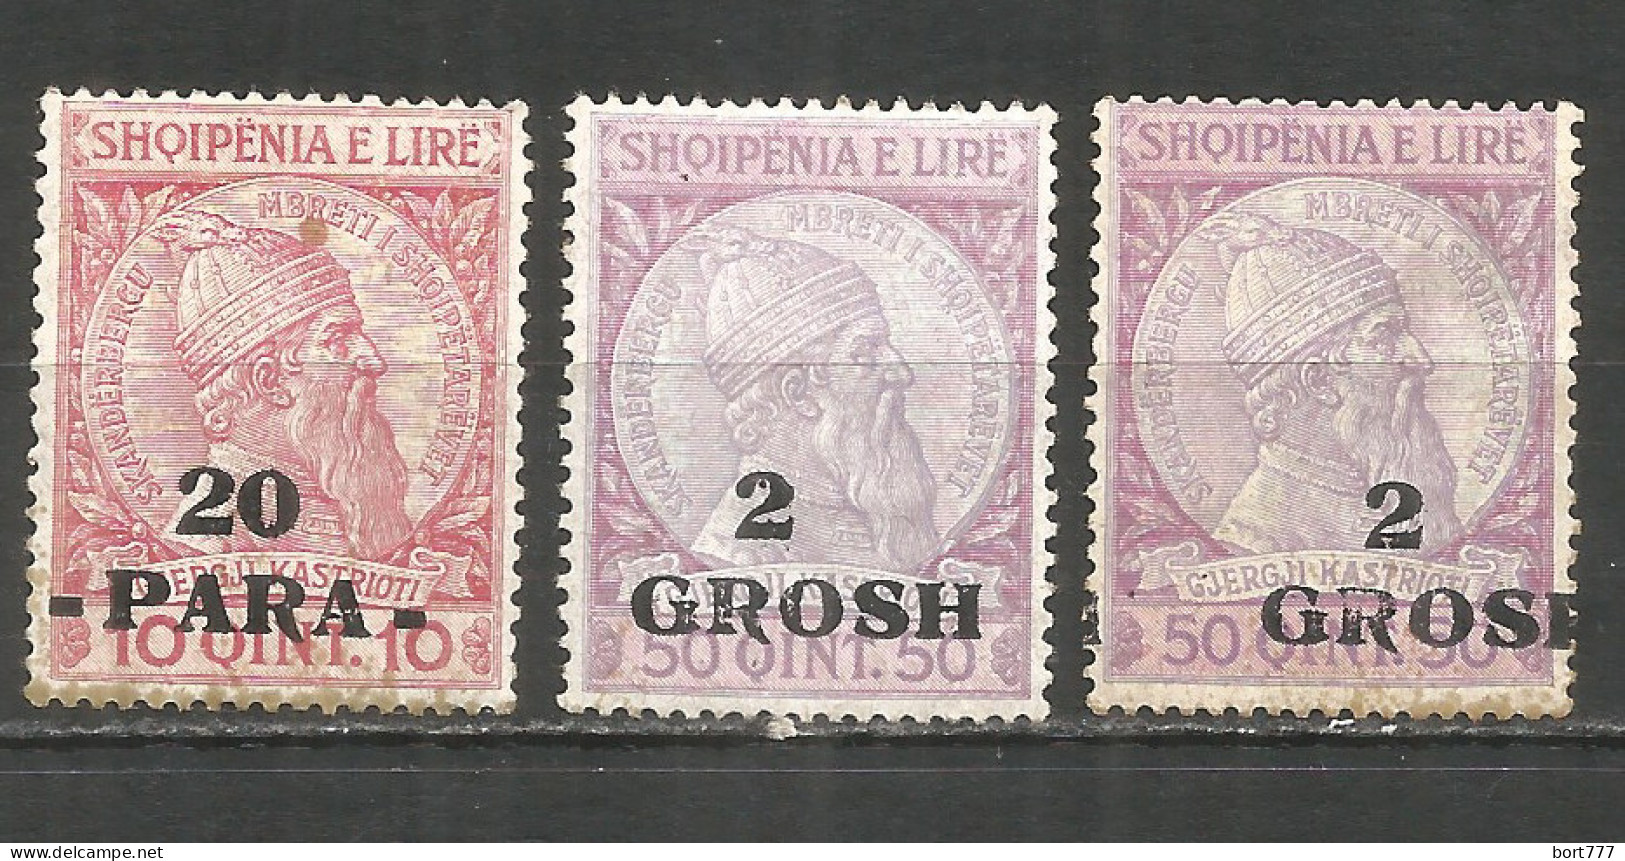 ALBANIA 1914 Mint Stamps MLH - Albania